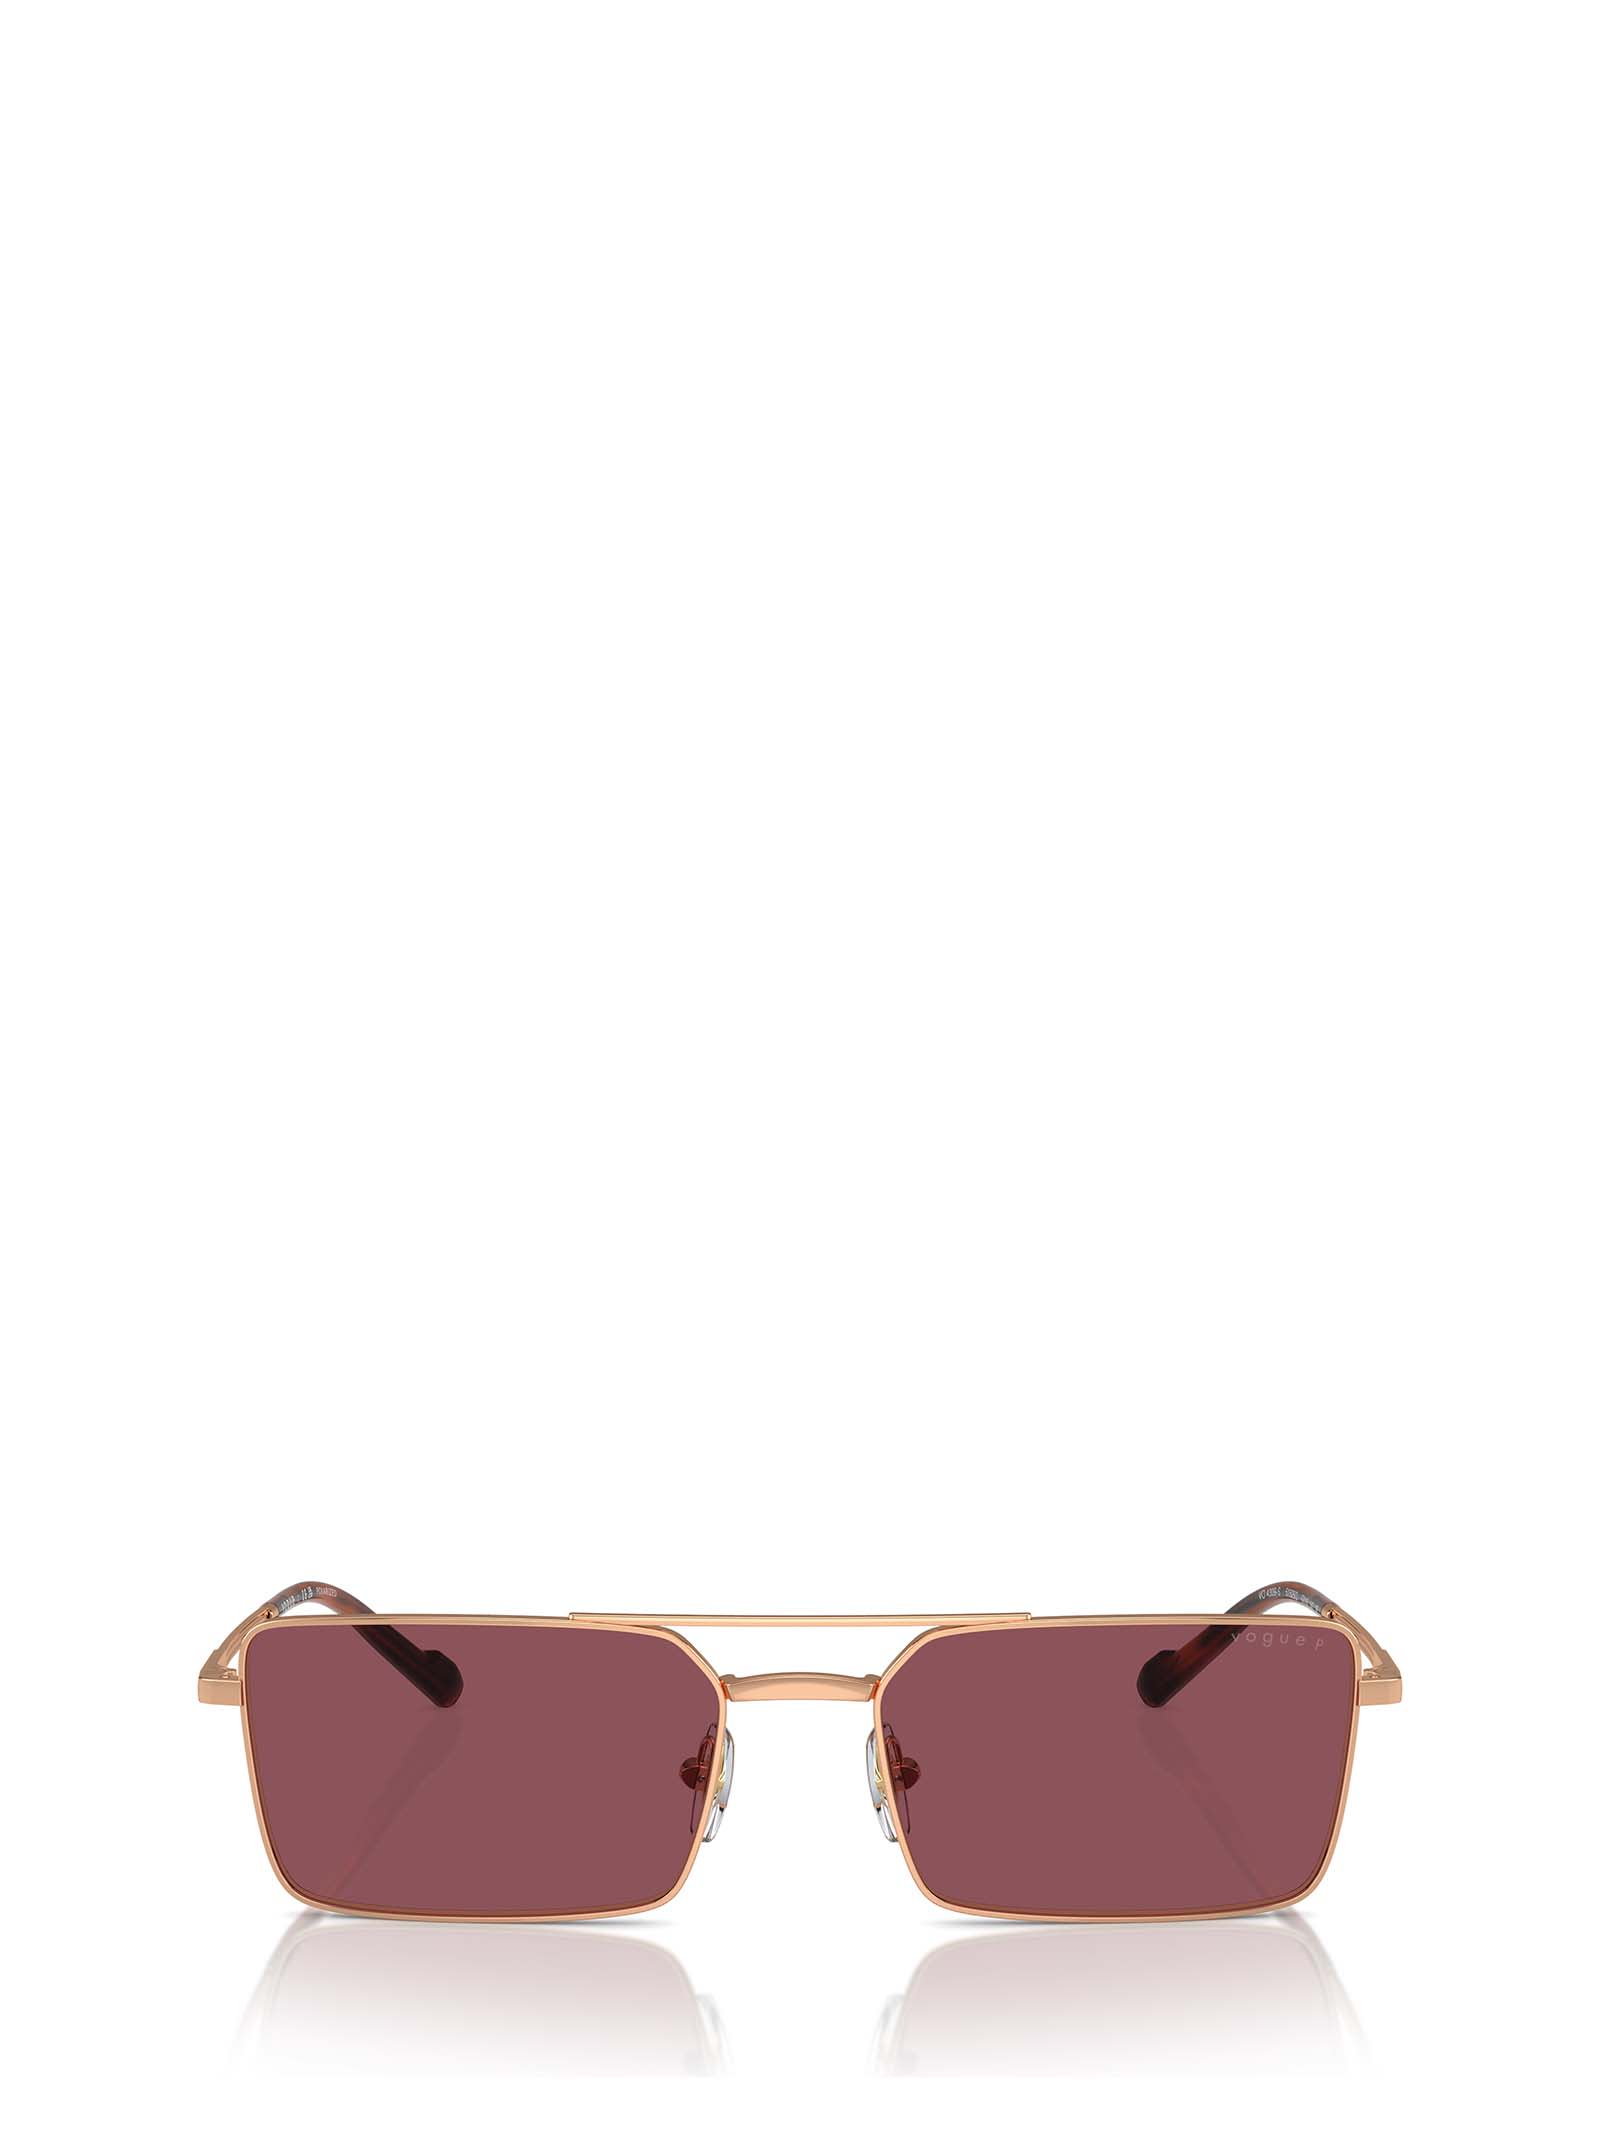 Vogue Eyewear Vo4309s Rose Gold Sunglasses